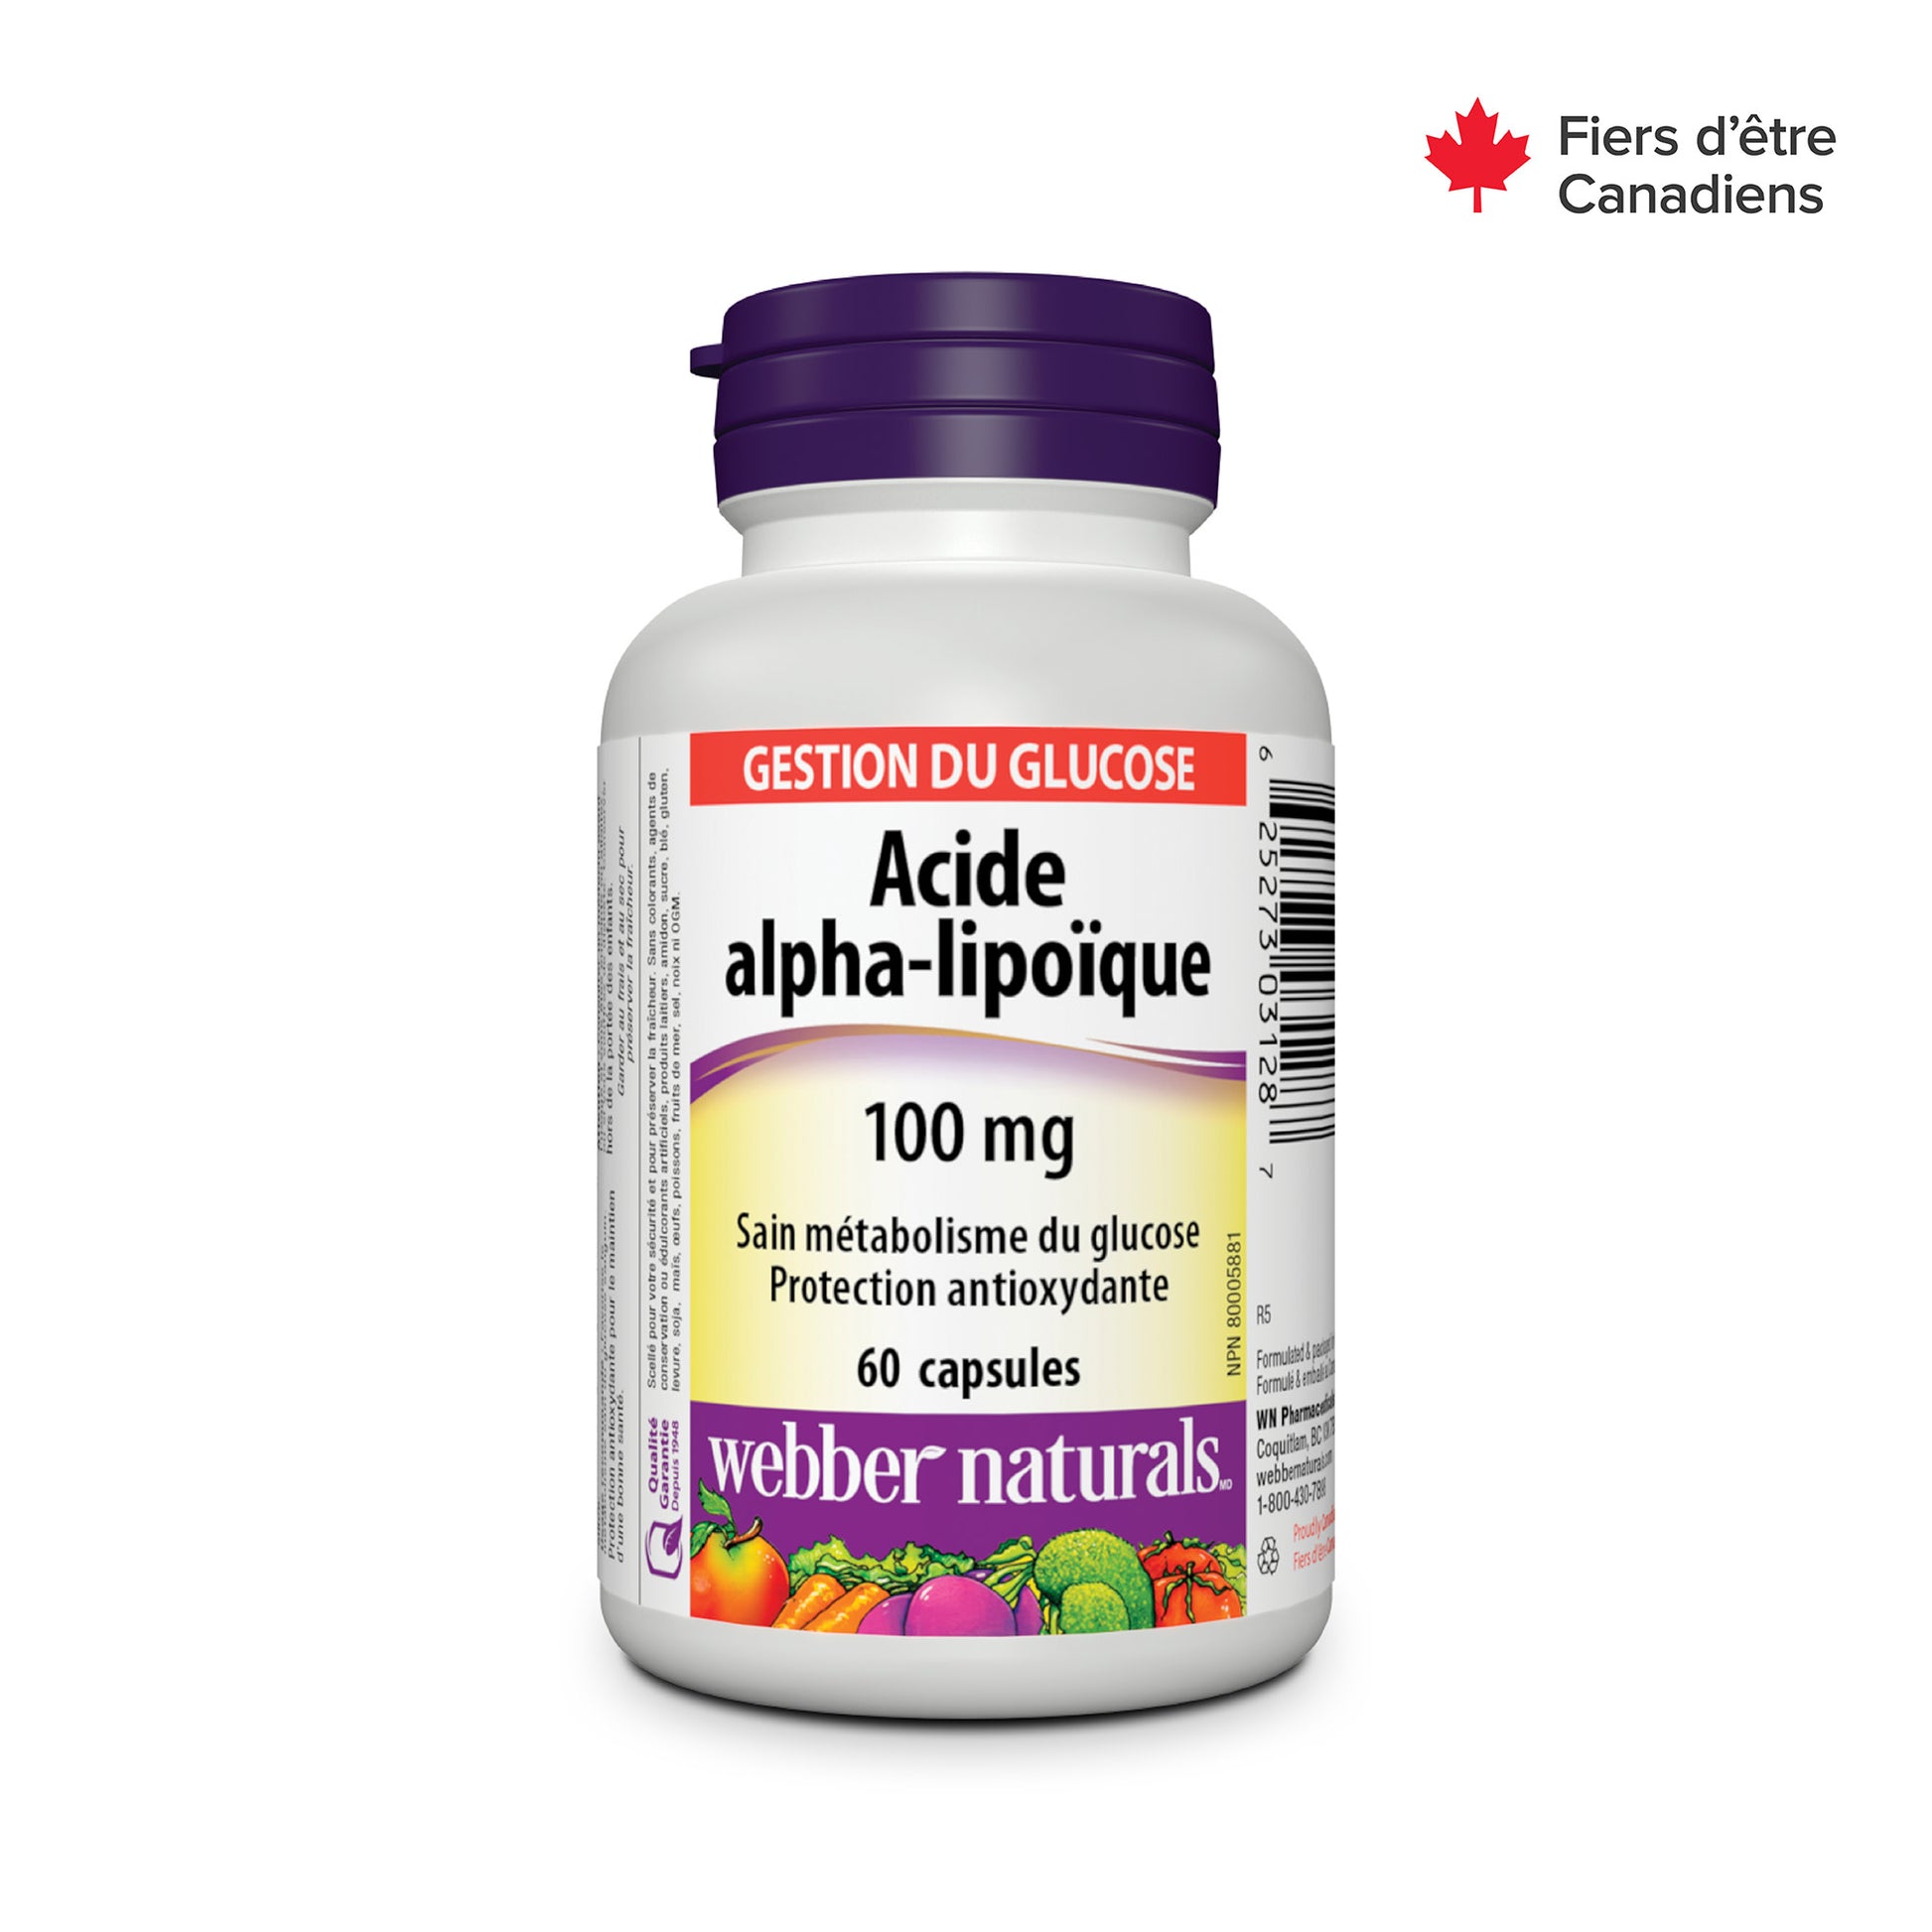 Acide alpha-lipoïque 100 mg for Webber Naturals|v|hi-res|WN3128